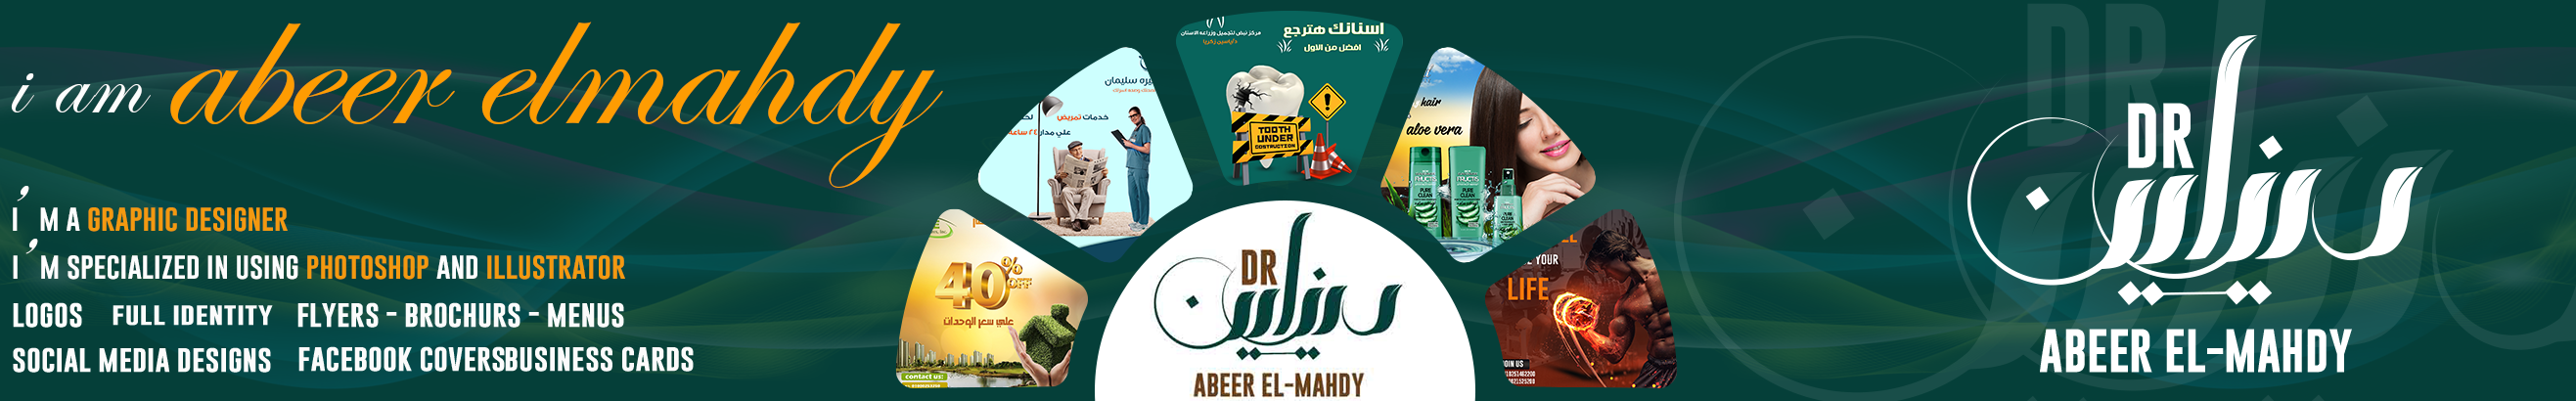 Banner profilu uživatele Abeer Elmahdy